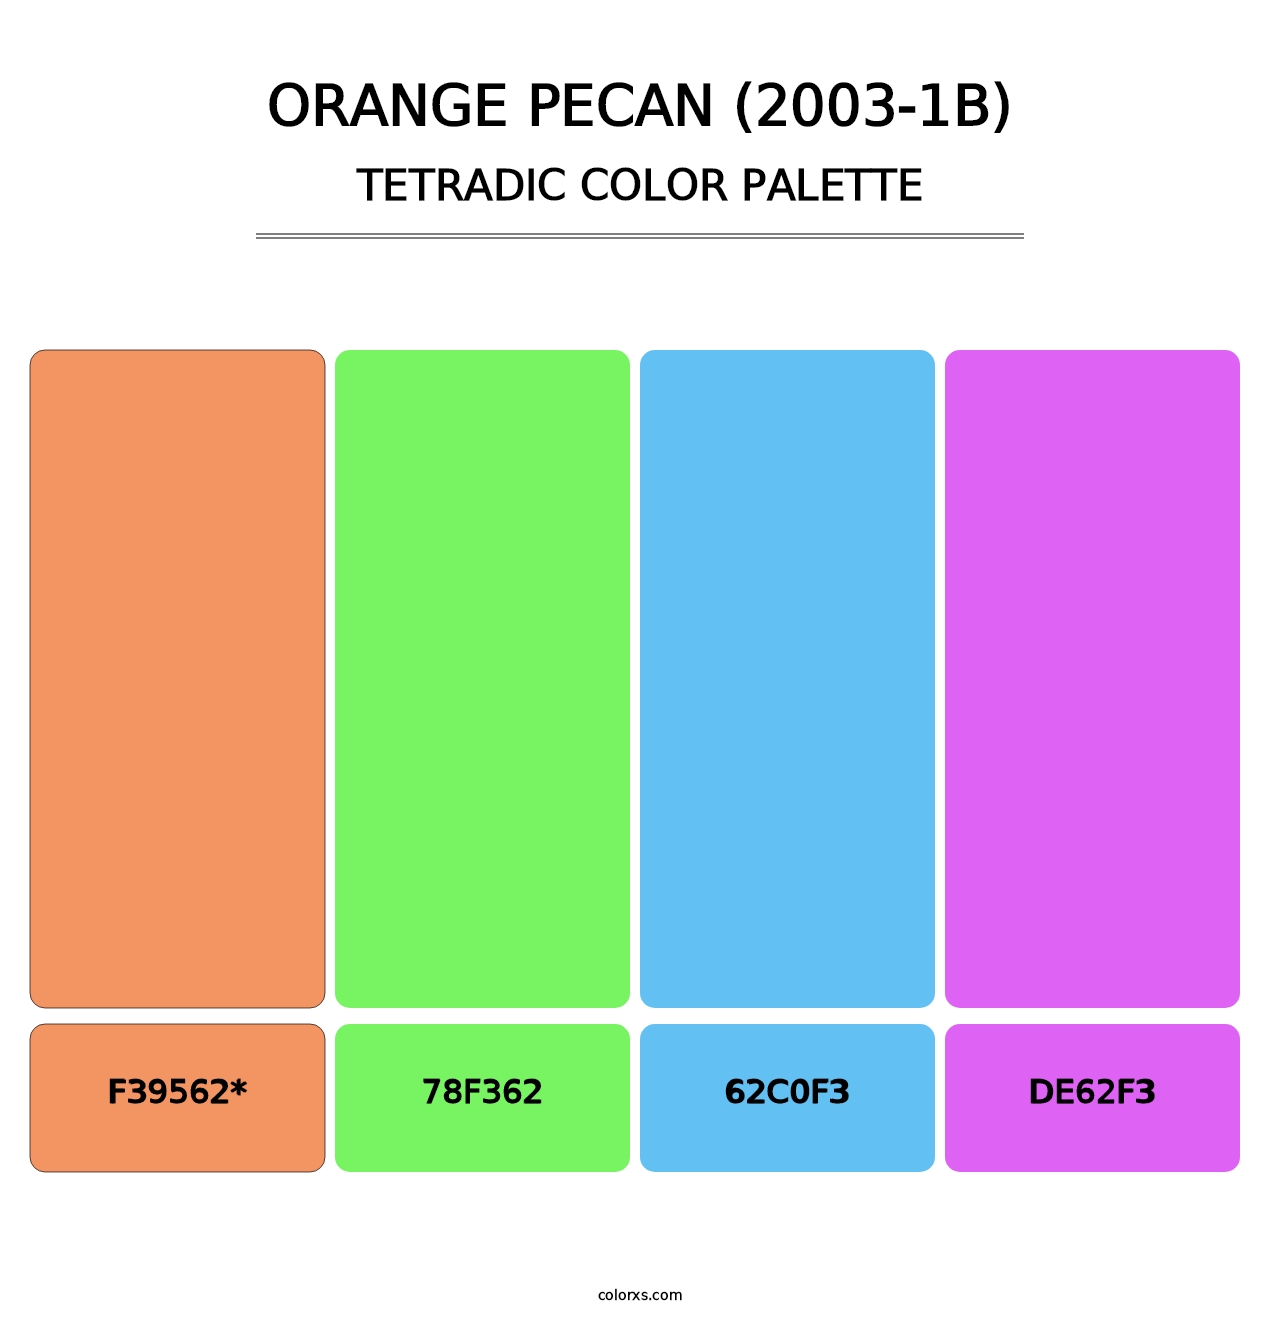 Orange Pecan (2003-1B) - Tetradic Color Palette